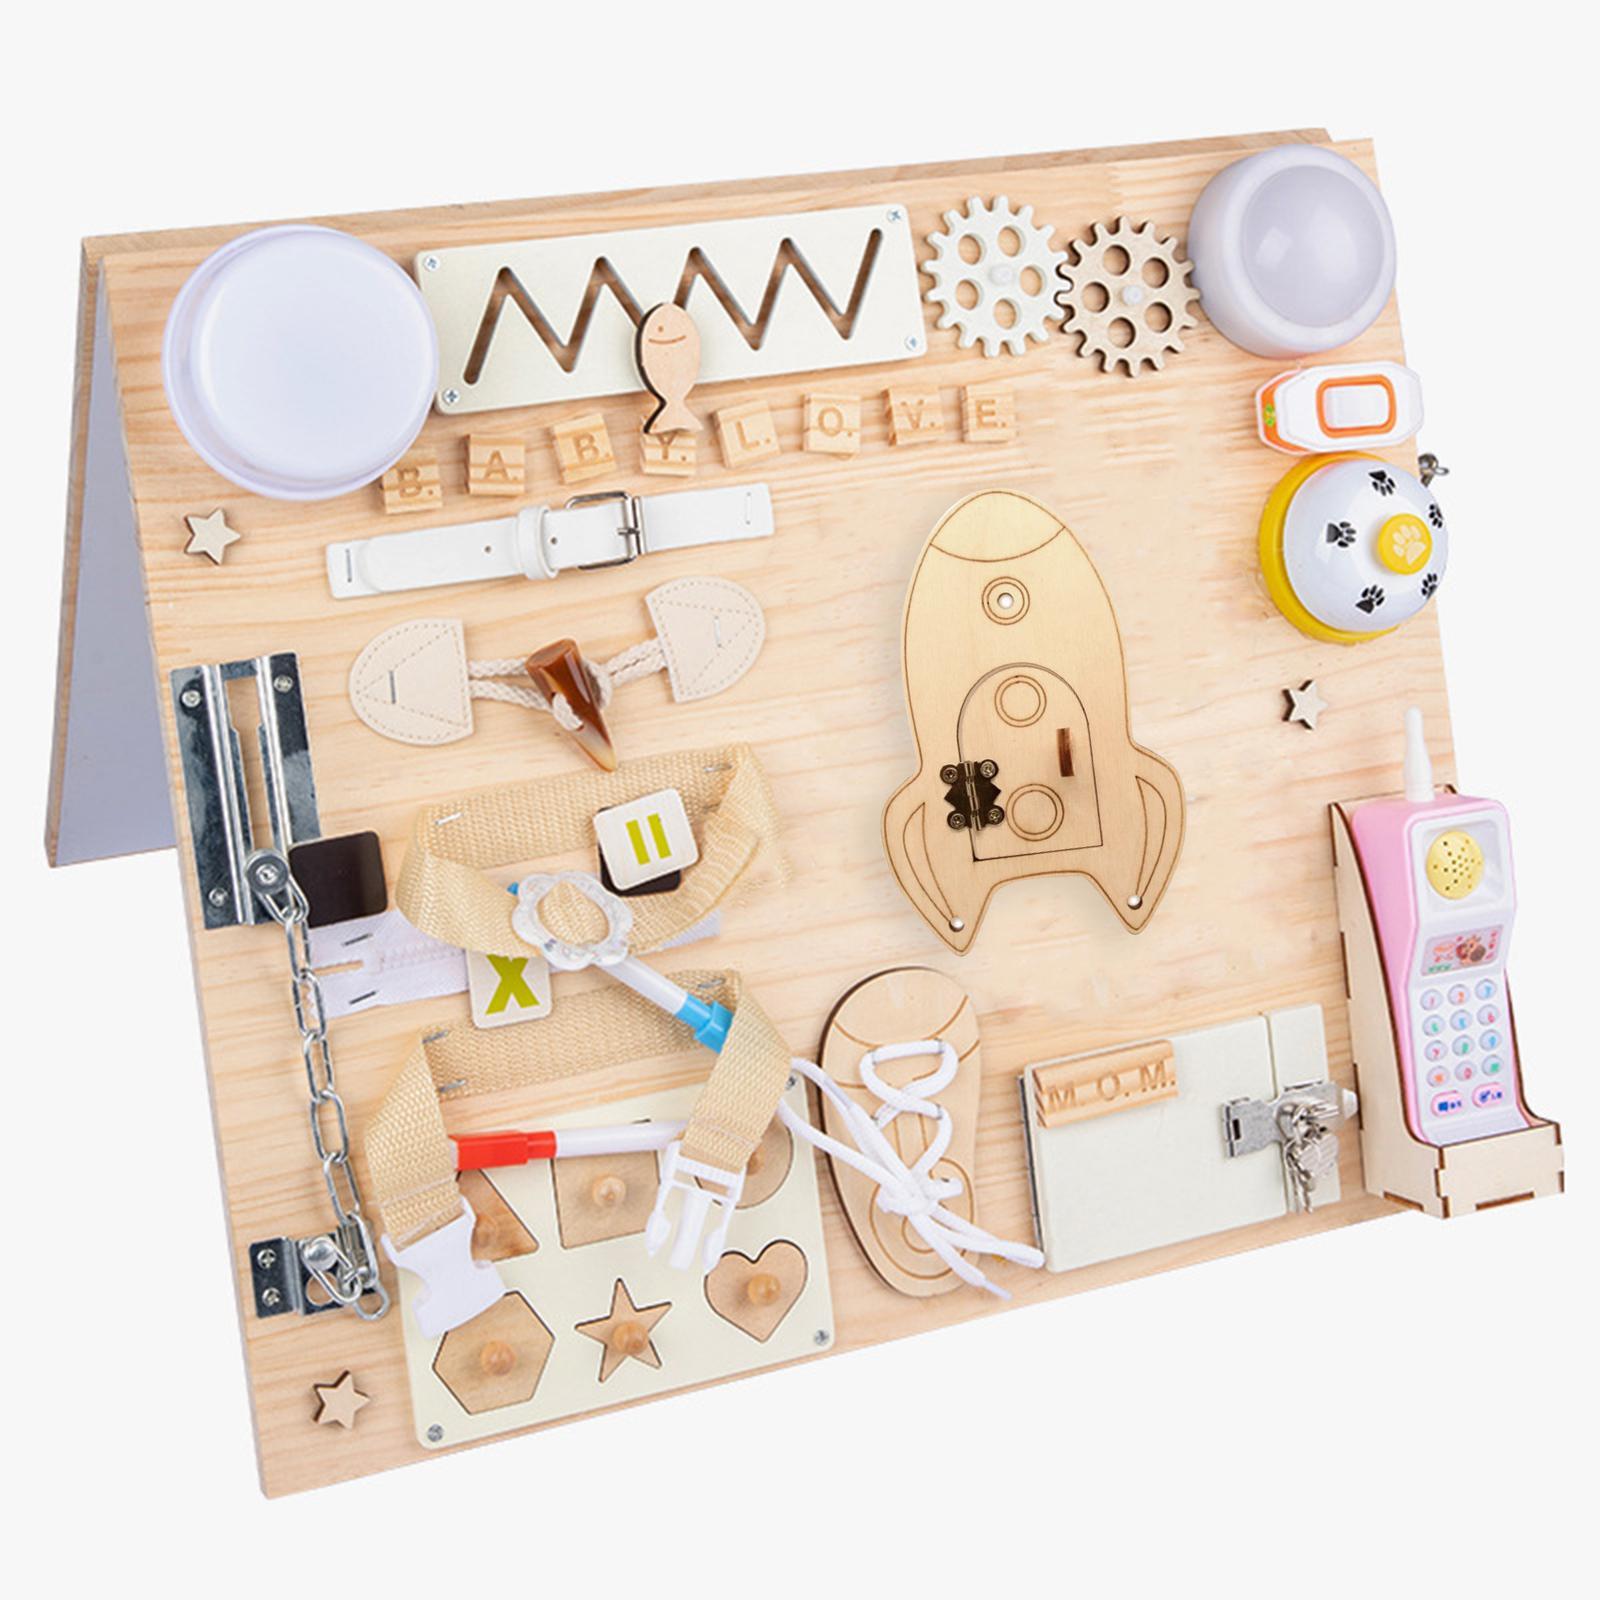 Busy Board DIY Material Sensory Toys Motor Skill Activity Board for Holiday Gifts